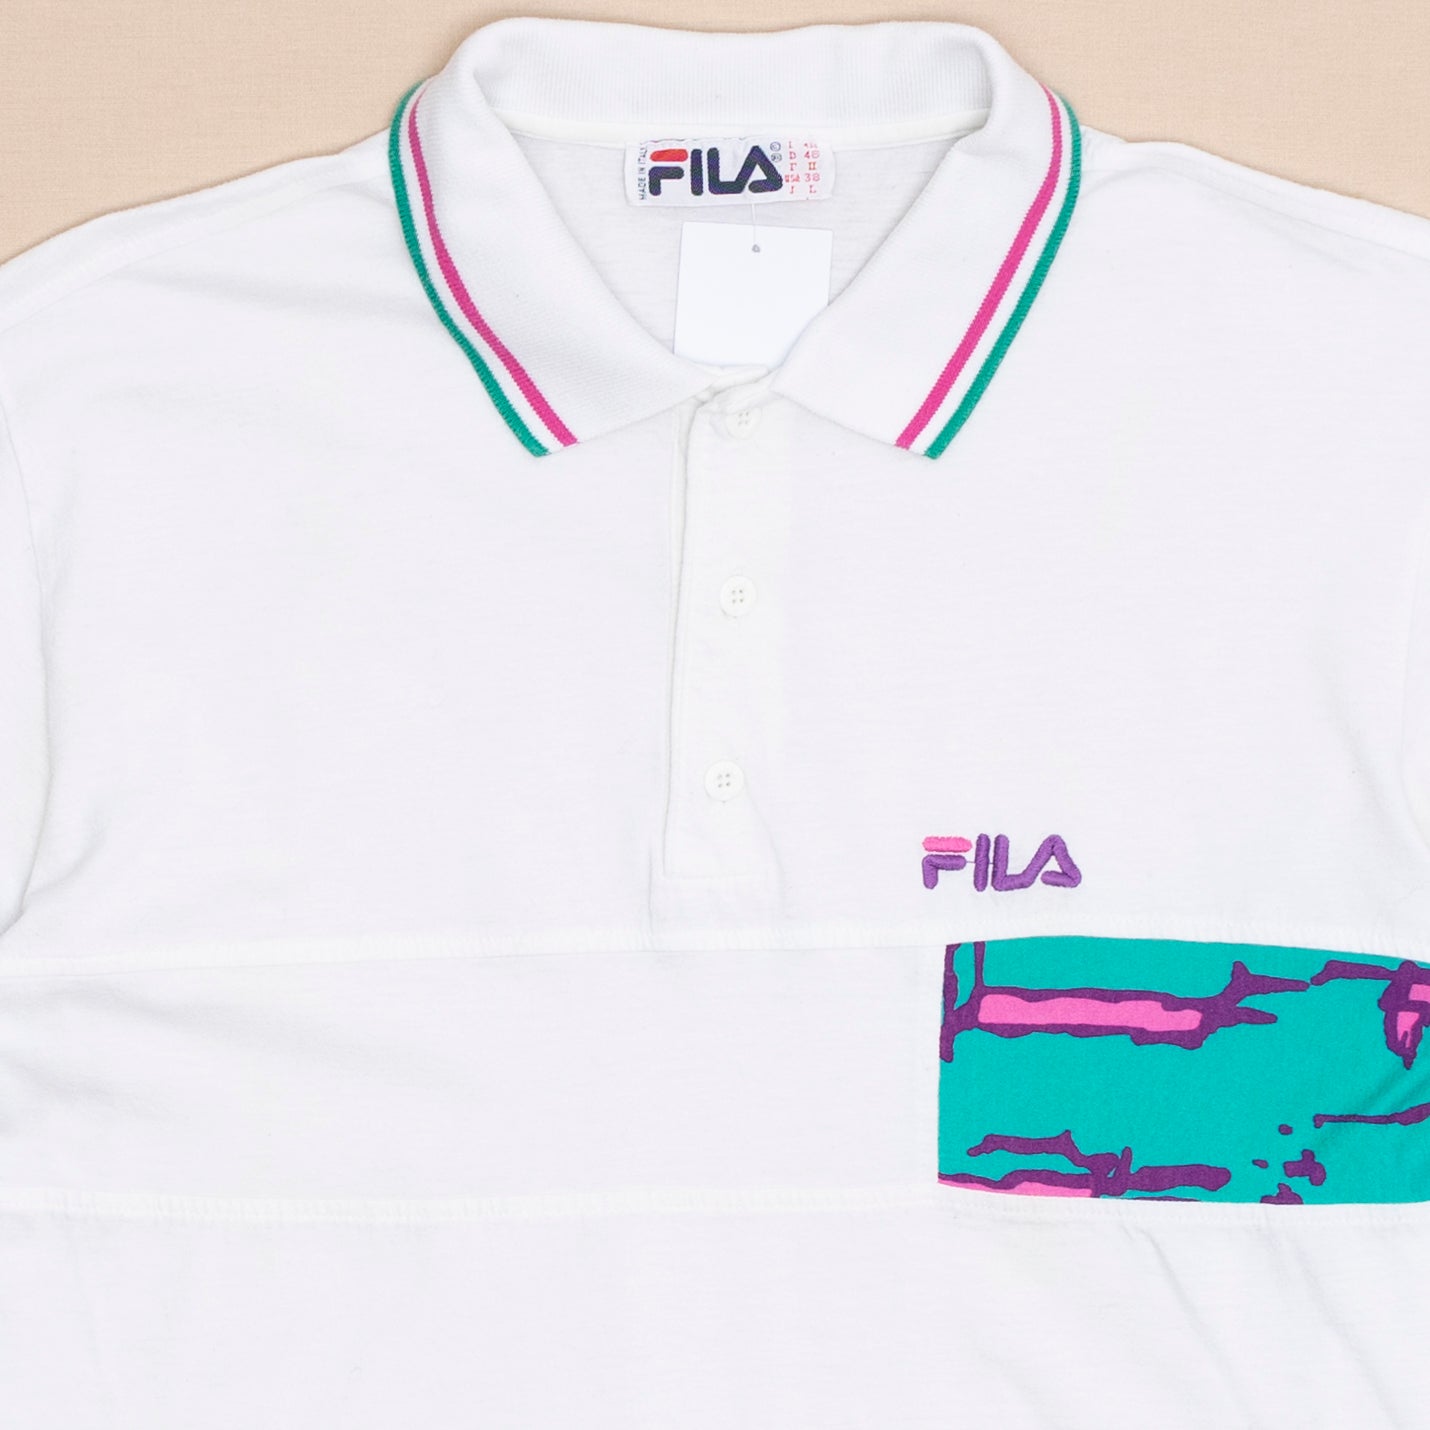 FILA Tennis Poloshirt, S